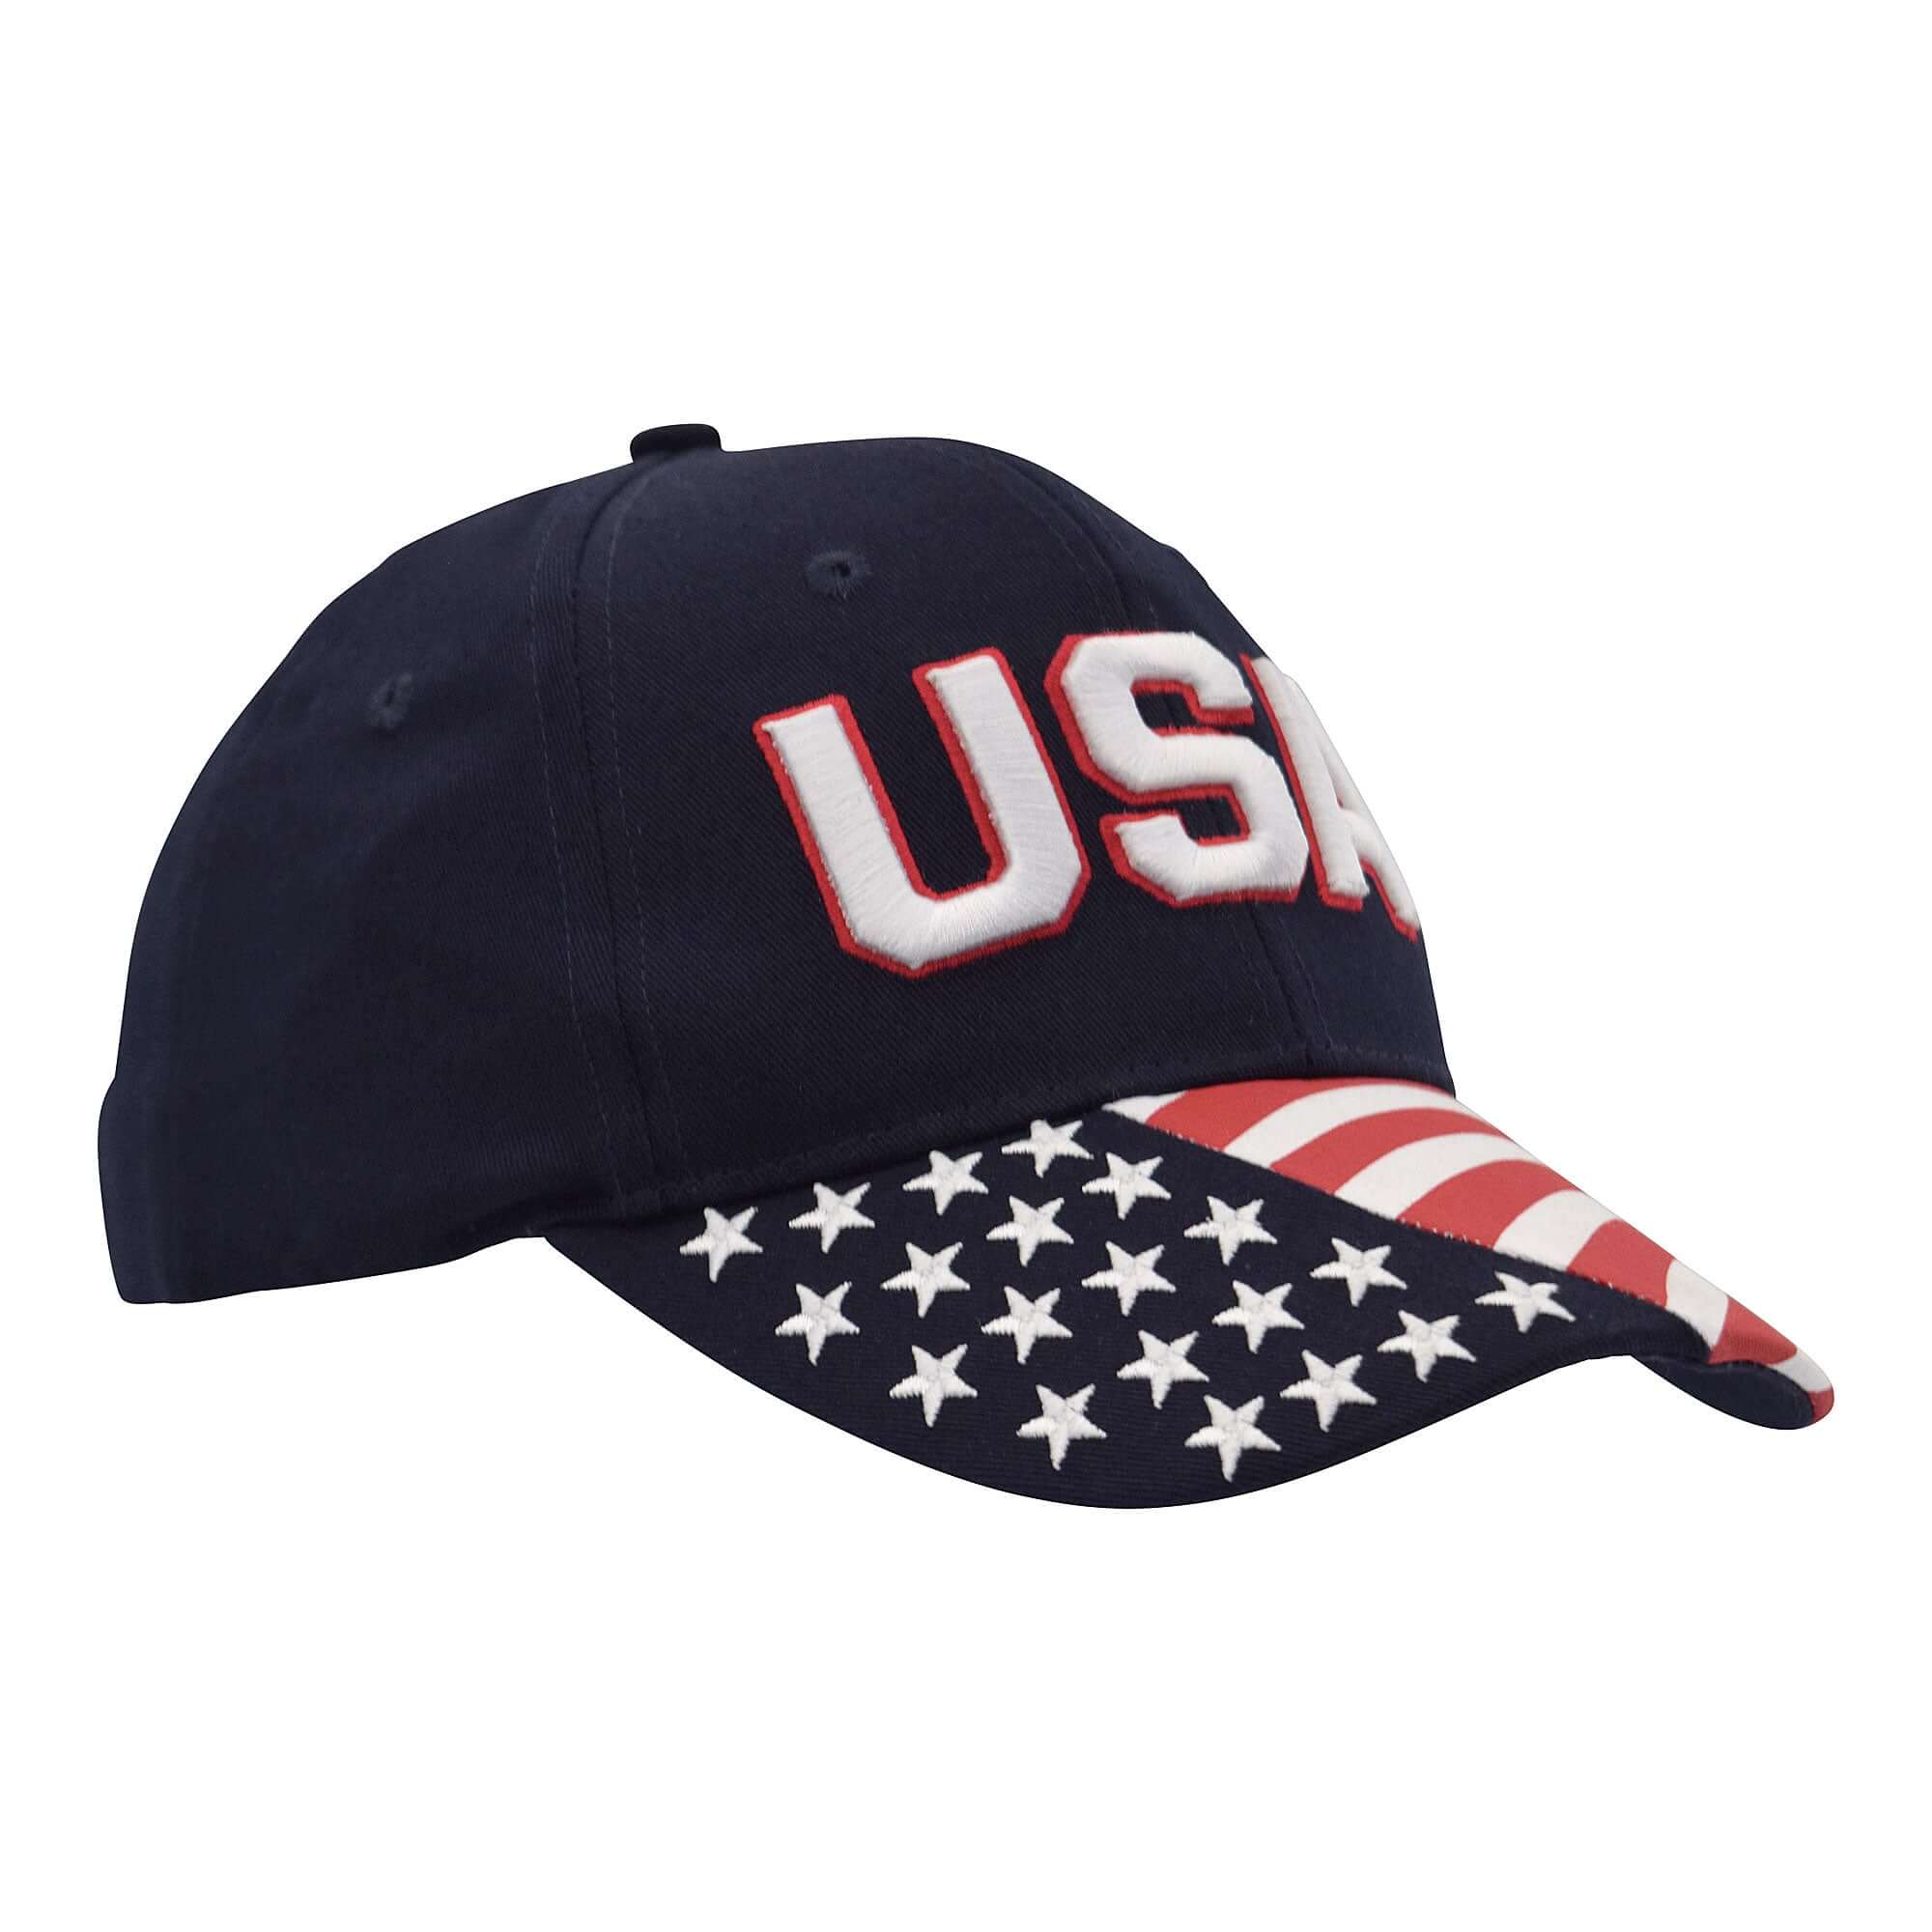 Cotton Twill USA Flag Cap